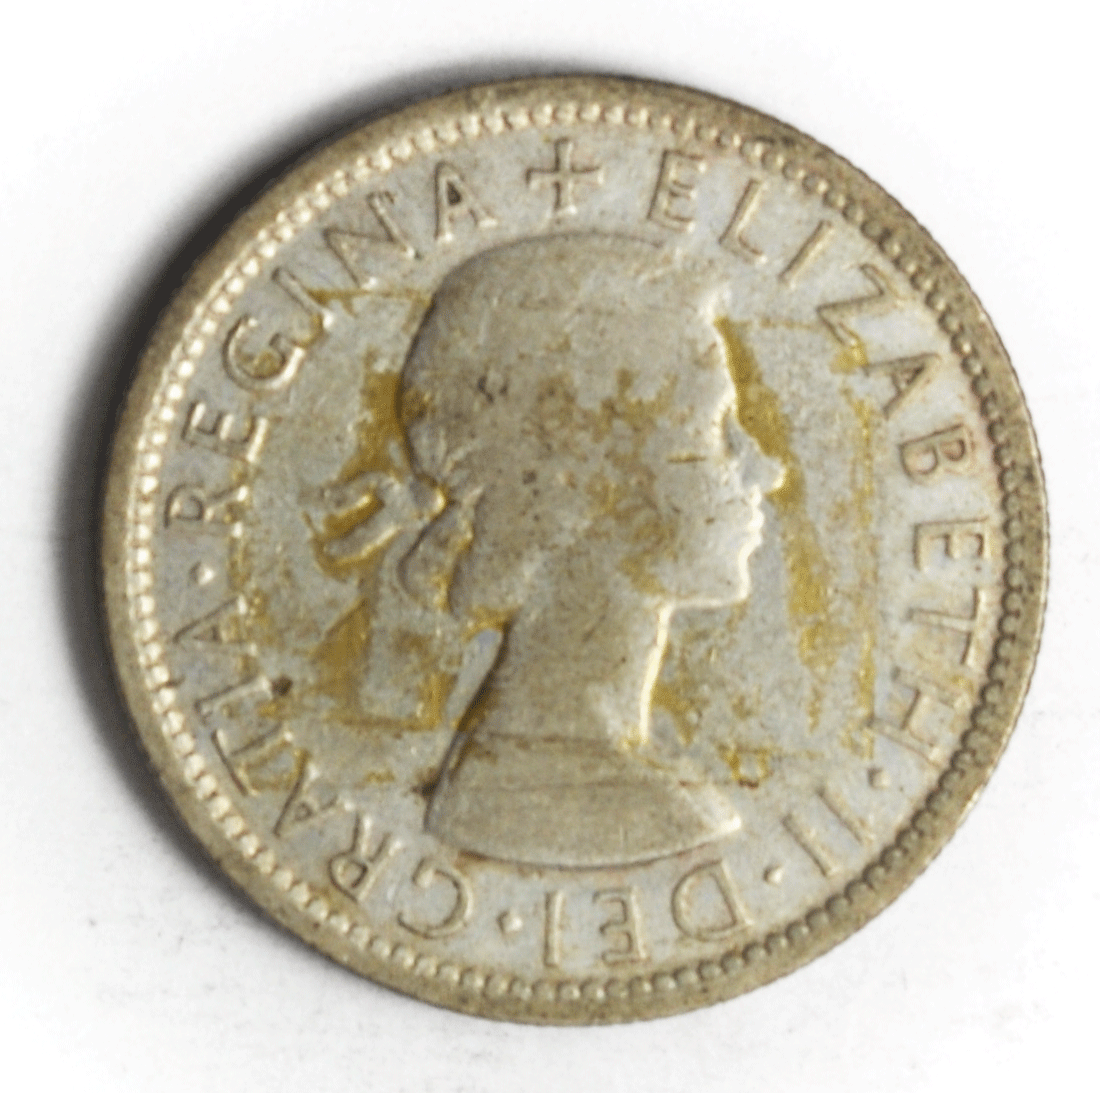 1954 m Australia Florin Silver Coin KM# 54